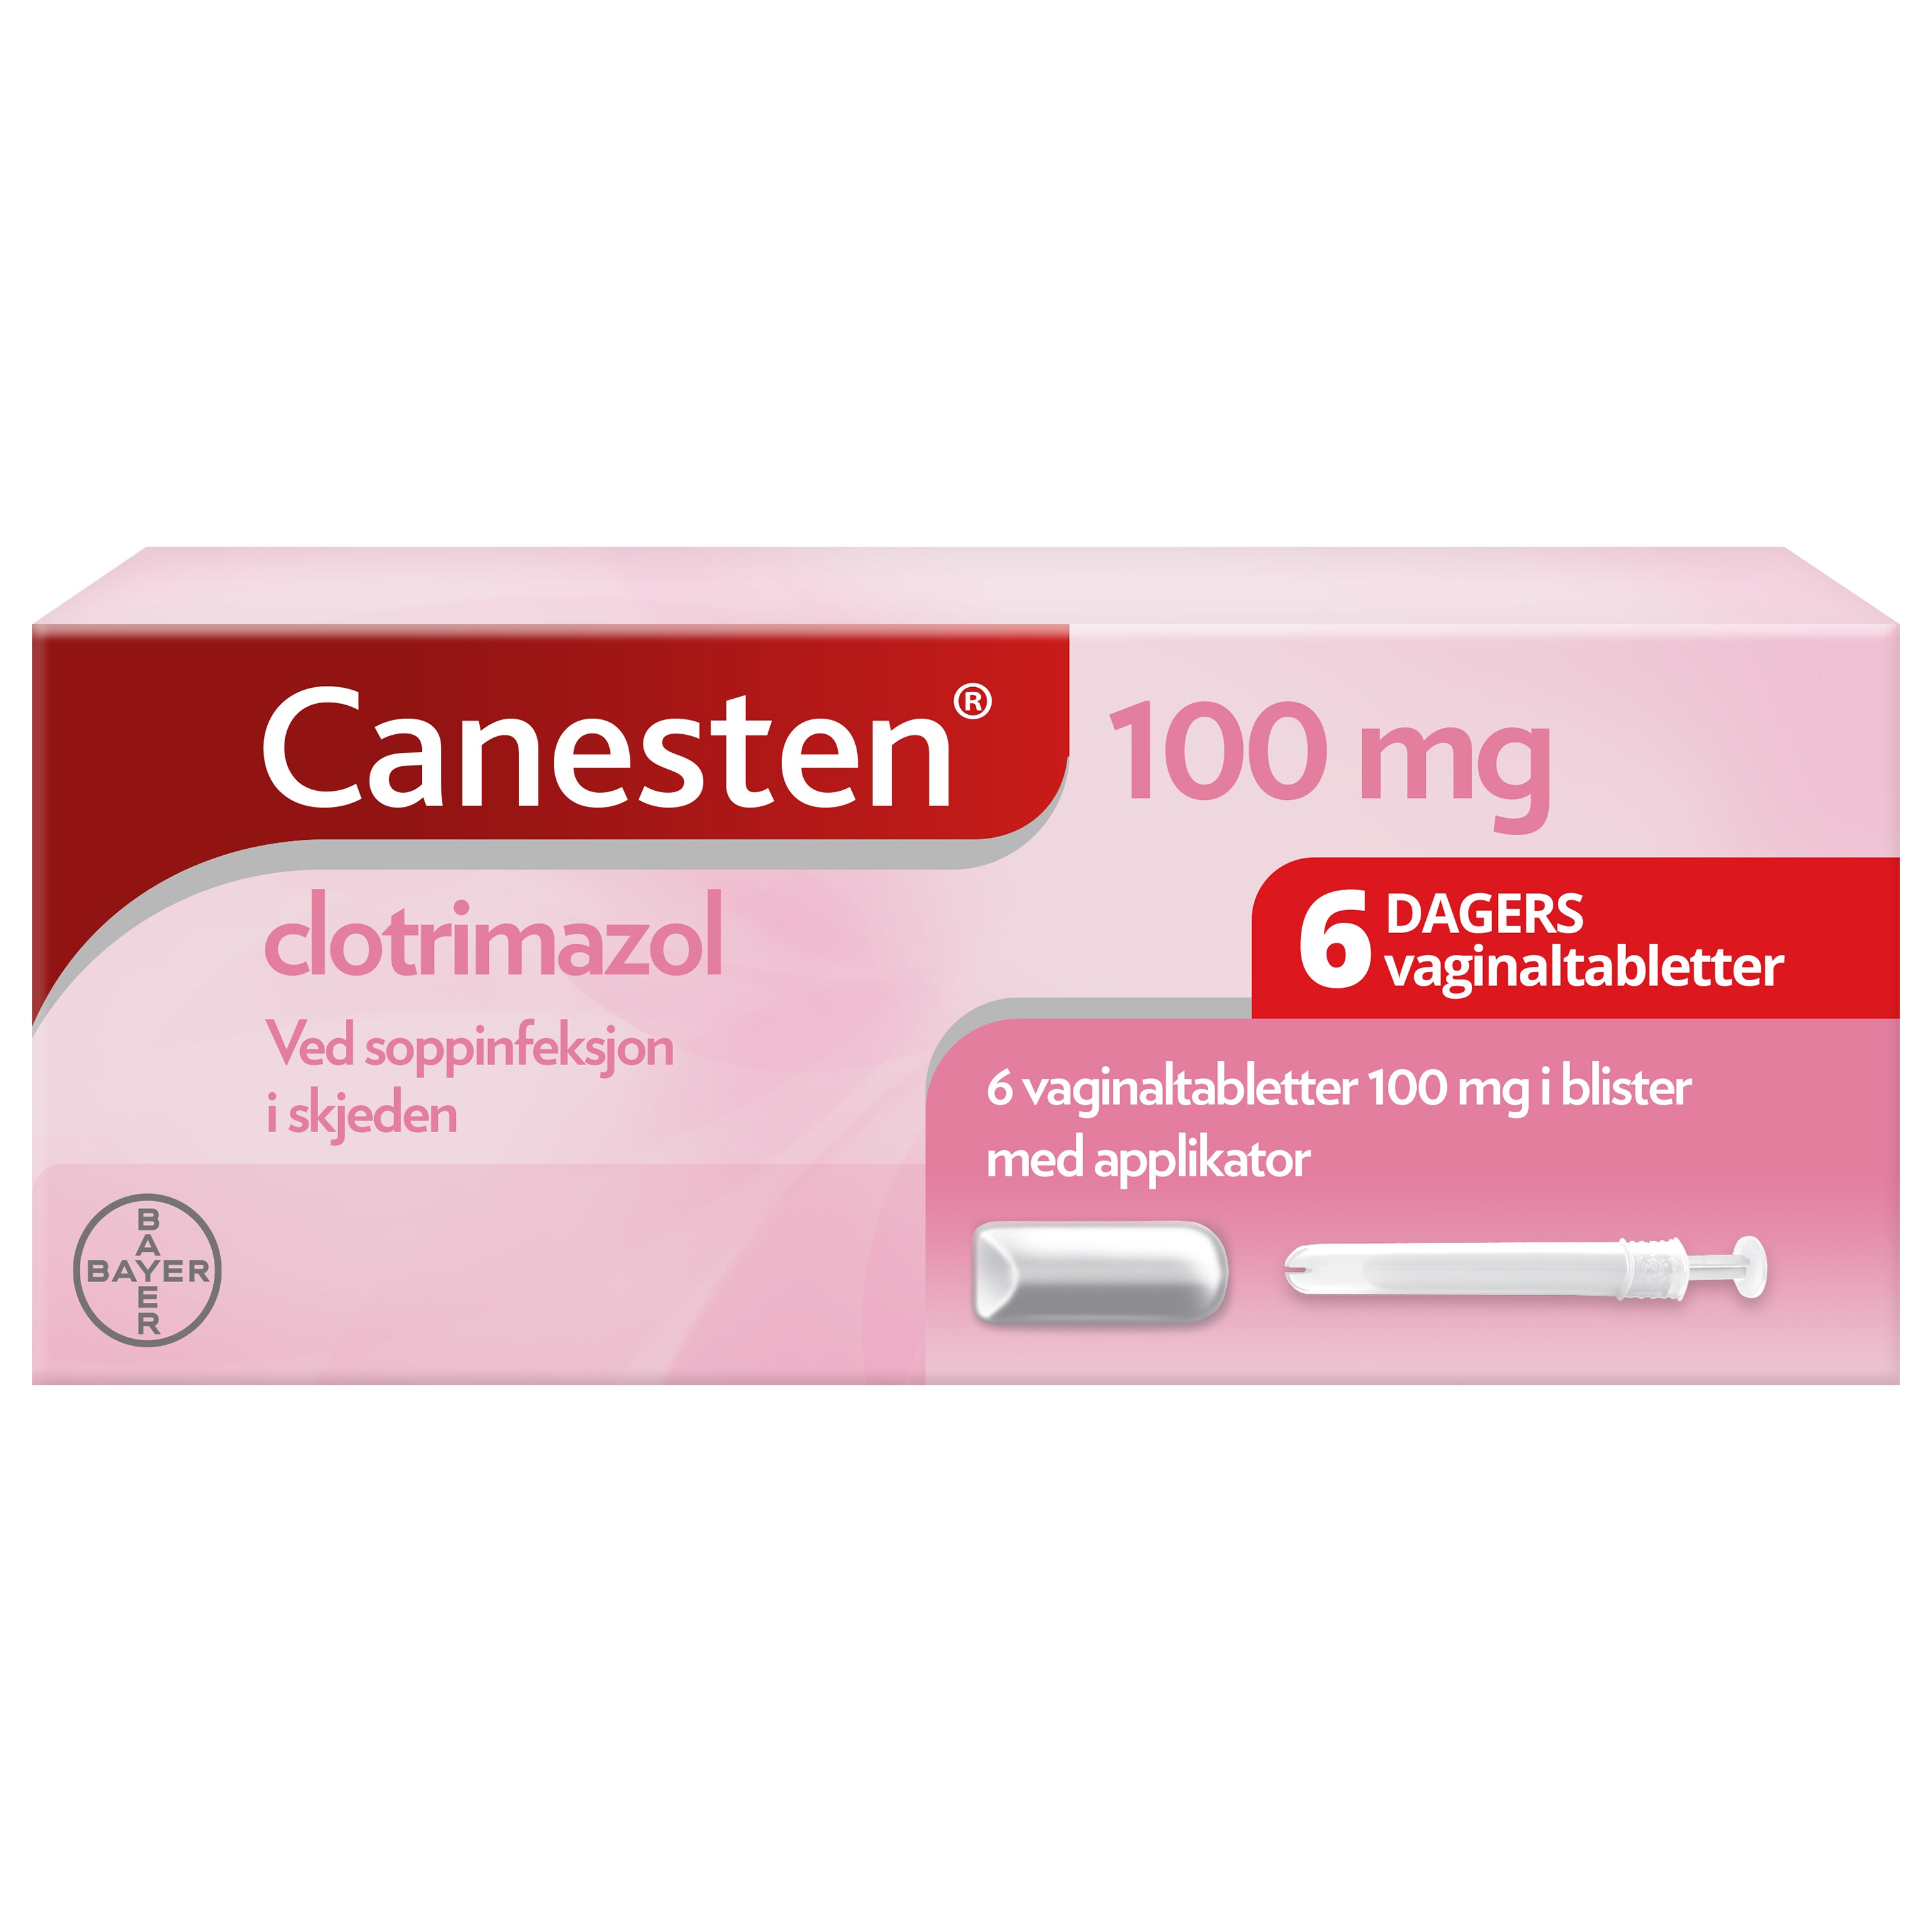 2020 Canesten 100 mg 6 Days Vag Tab Ecomm PDP PI SPS PSD NO.png